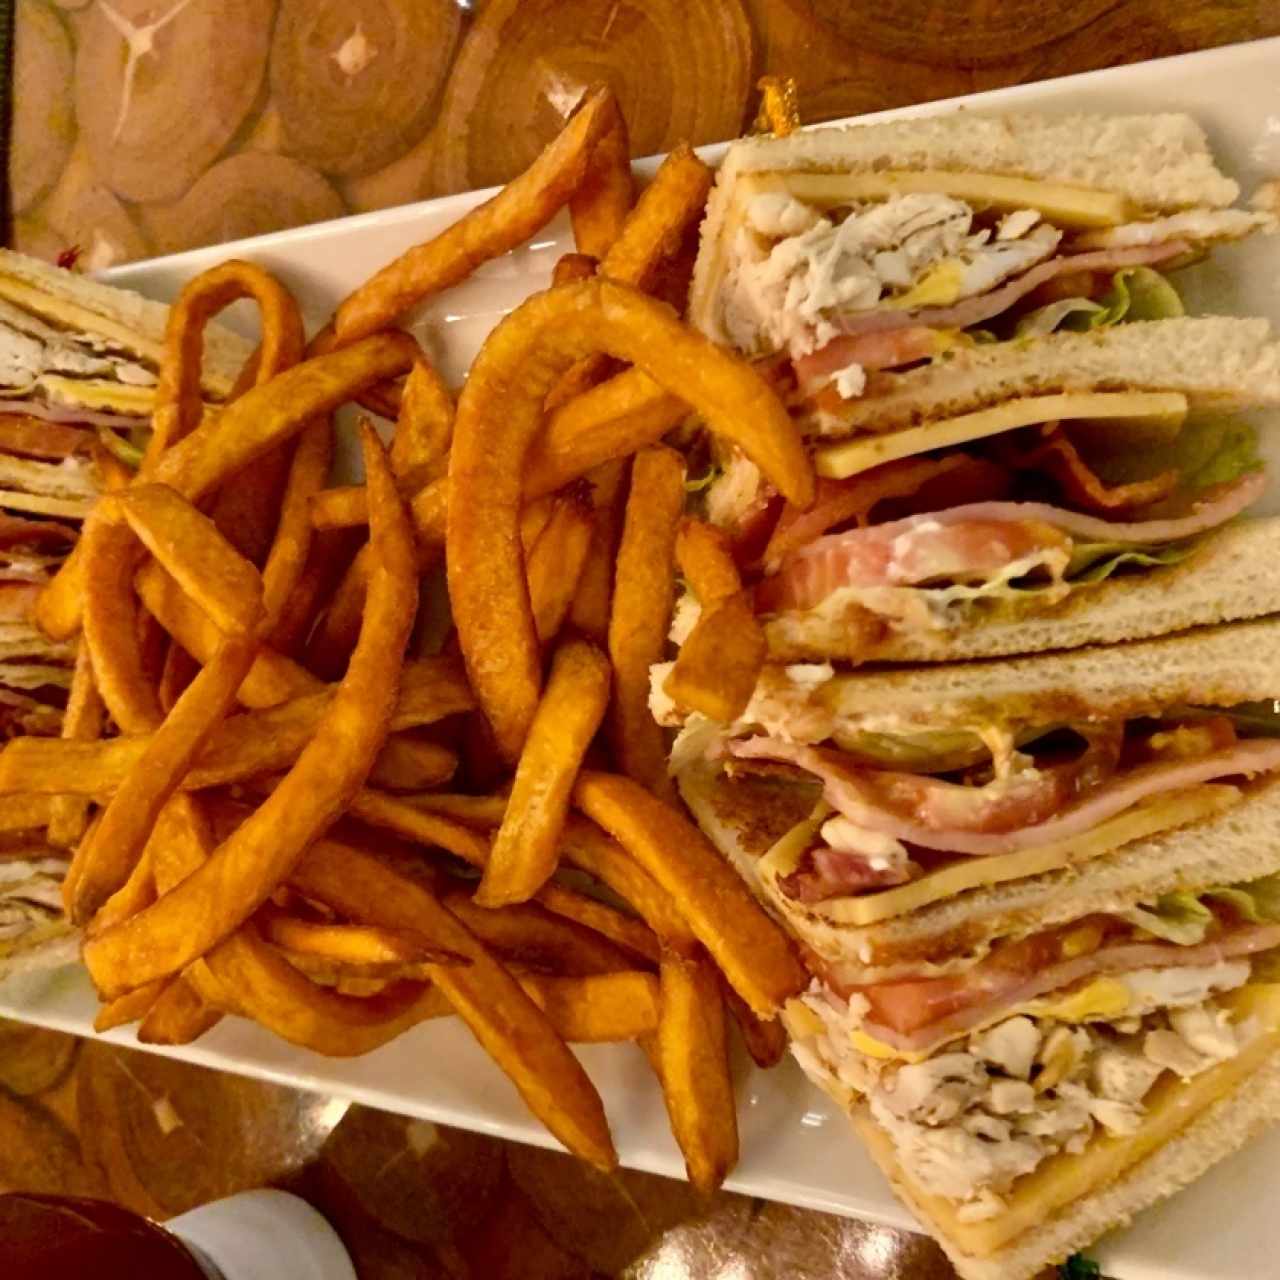 Emparedados - Club sandwich con Camote Frito